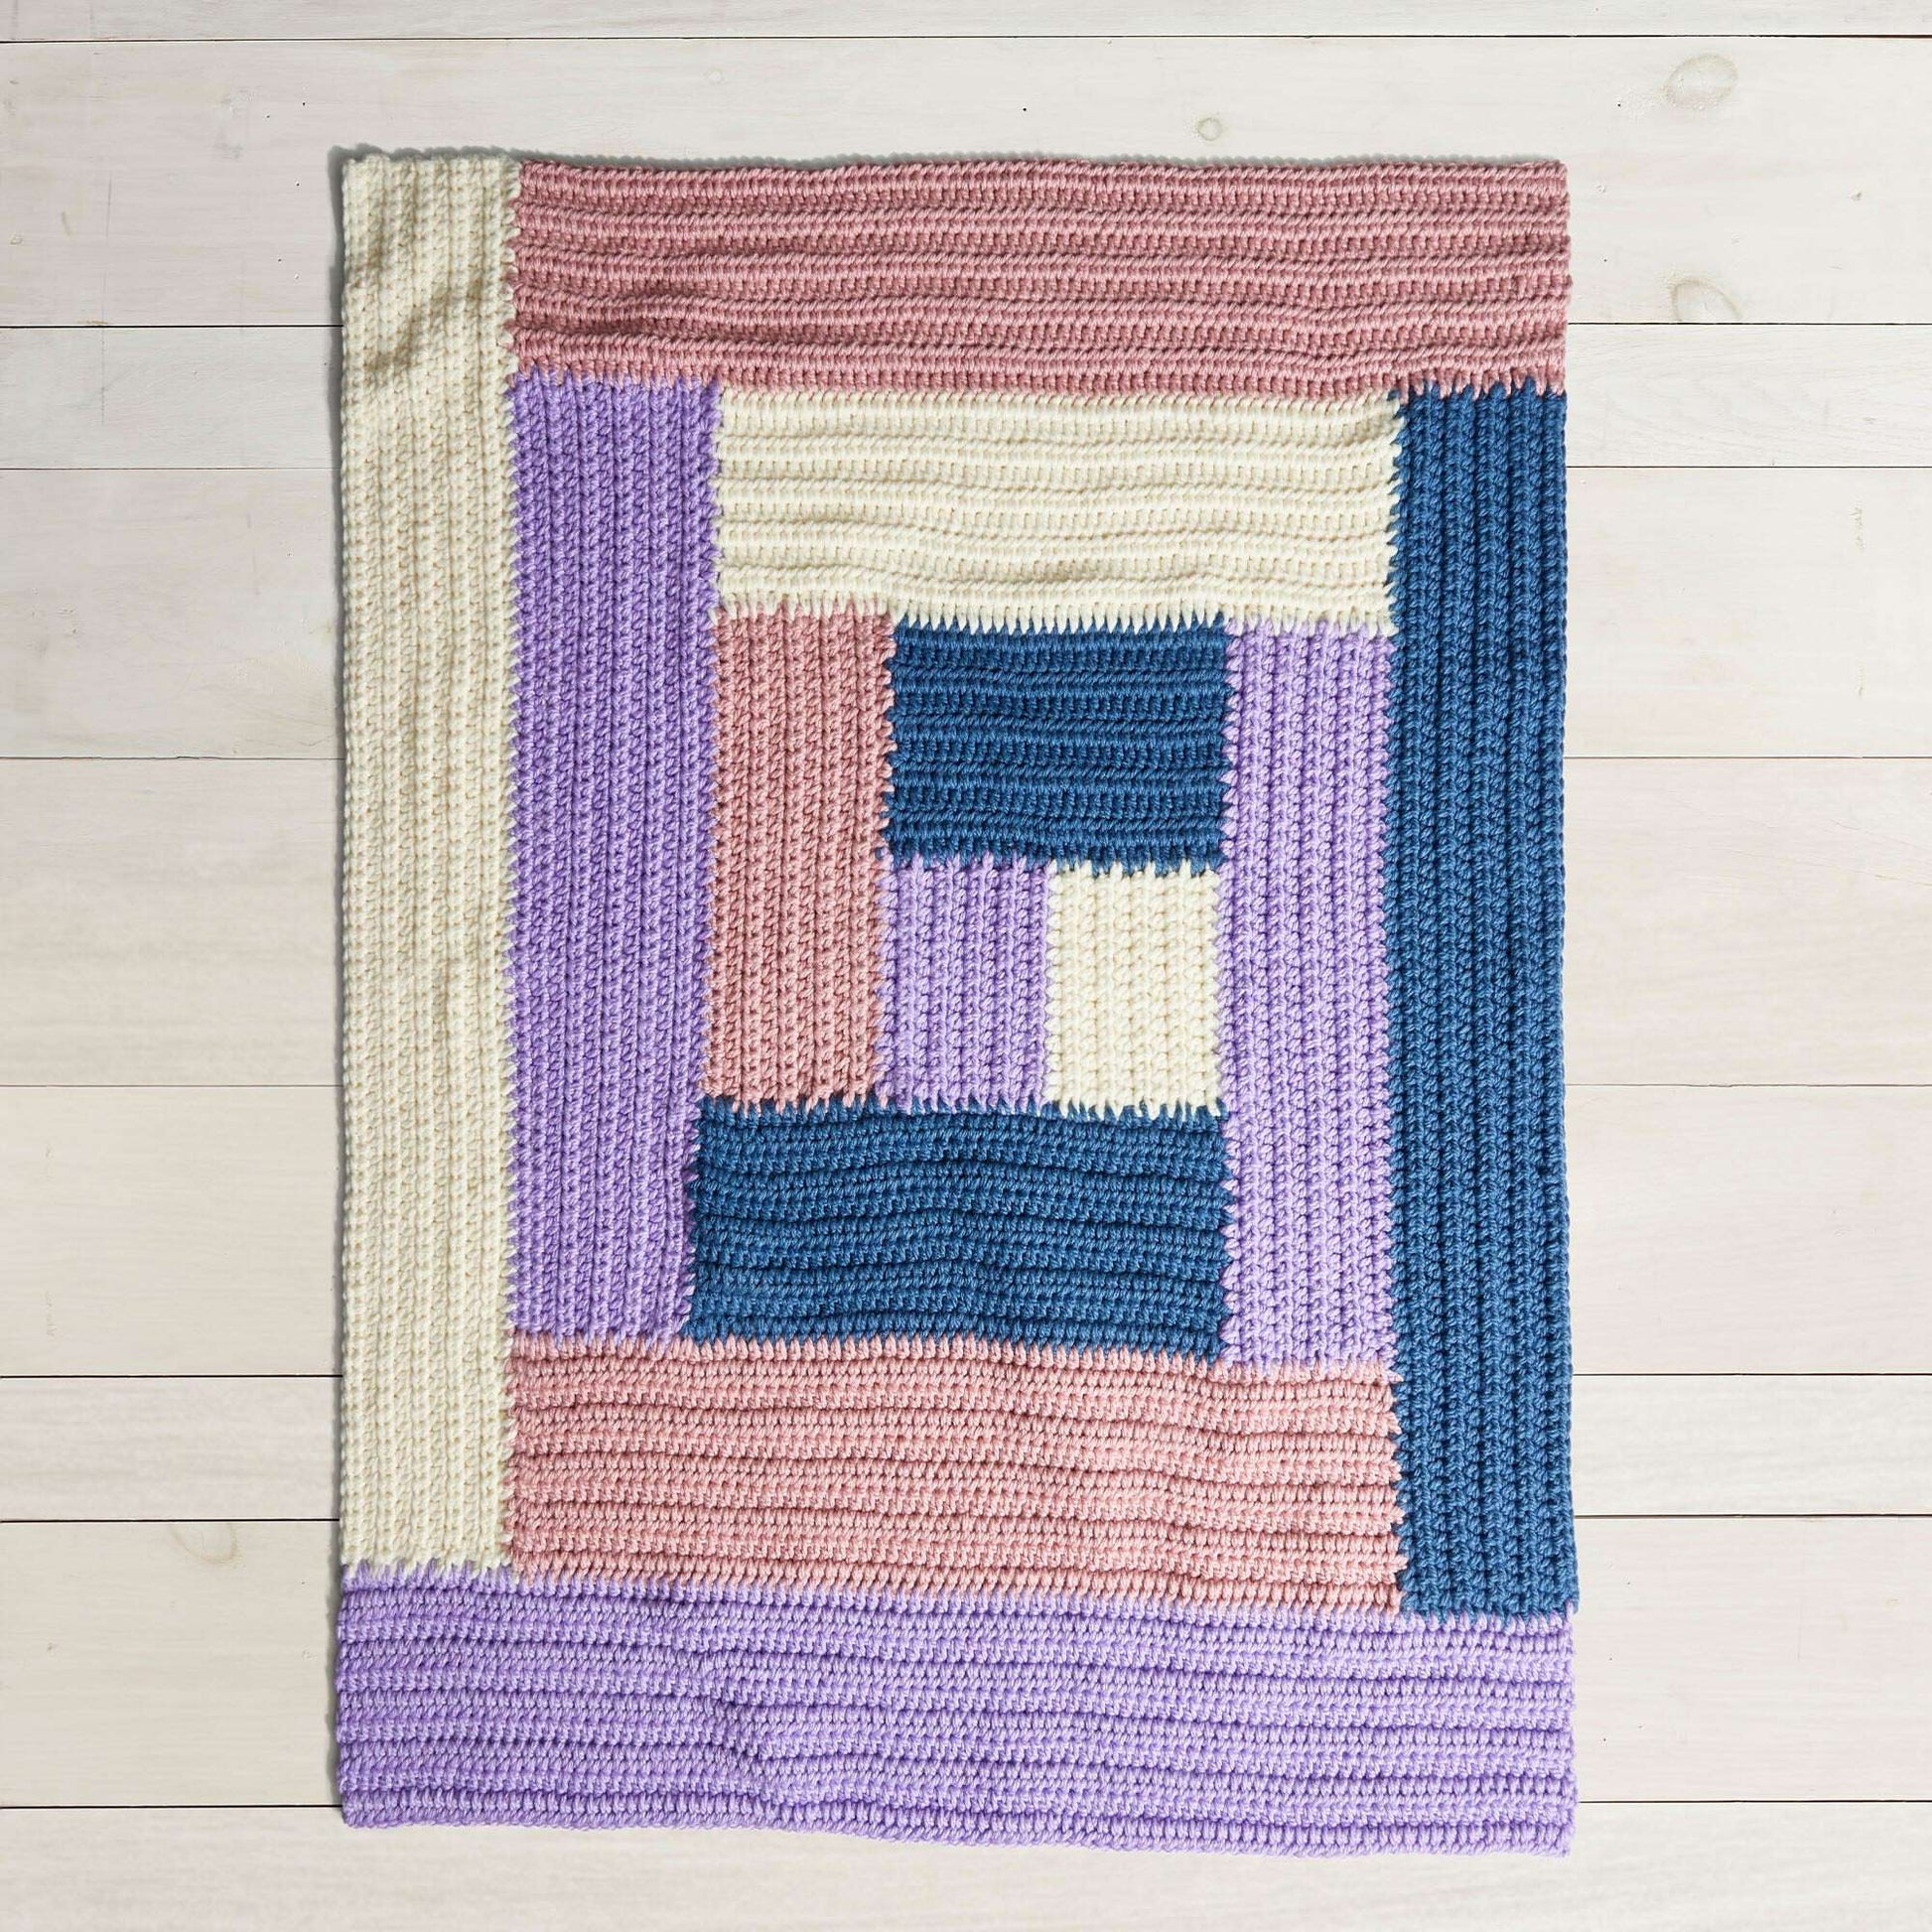 Free Stitch Club Crochet Log Cabin Blanket + Tutorial Pattern